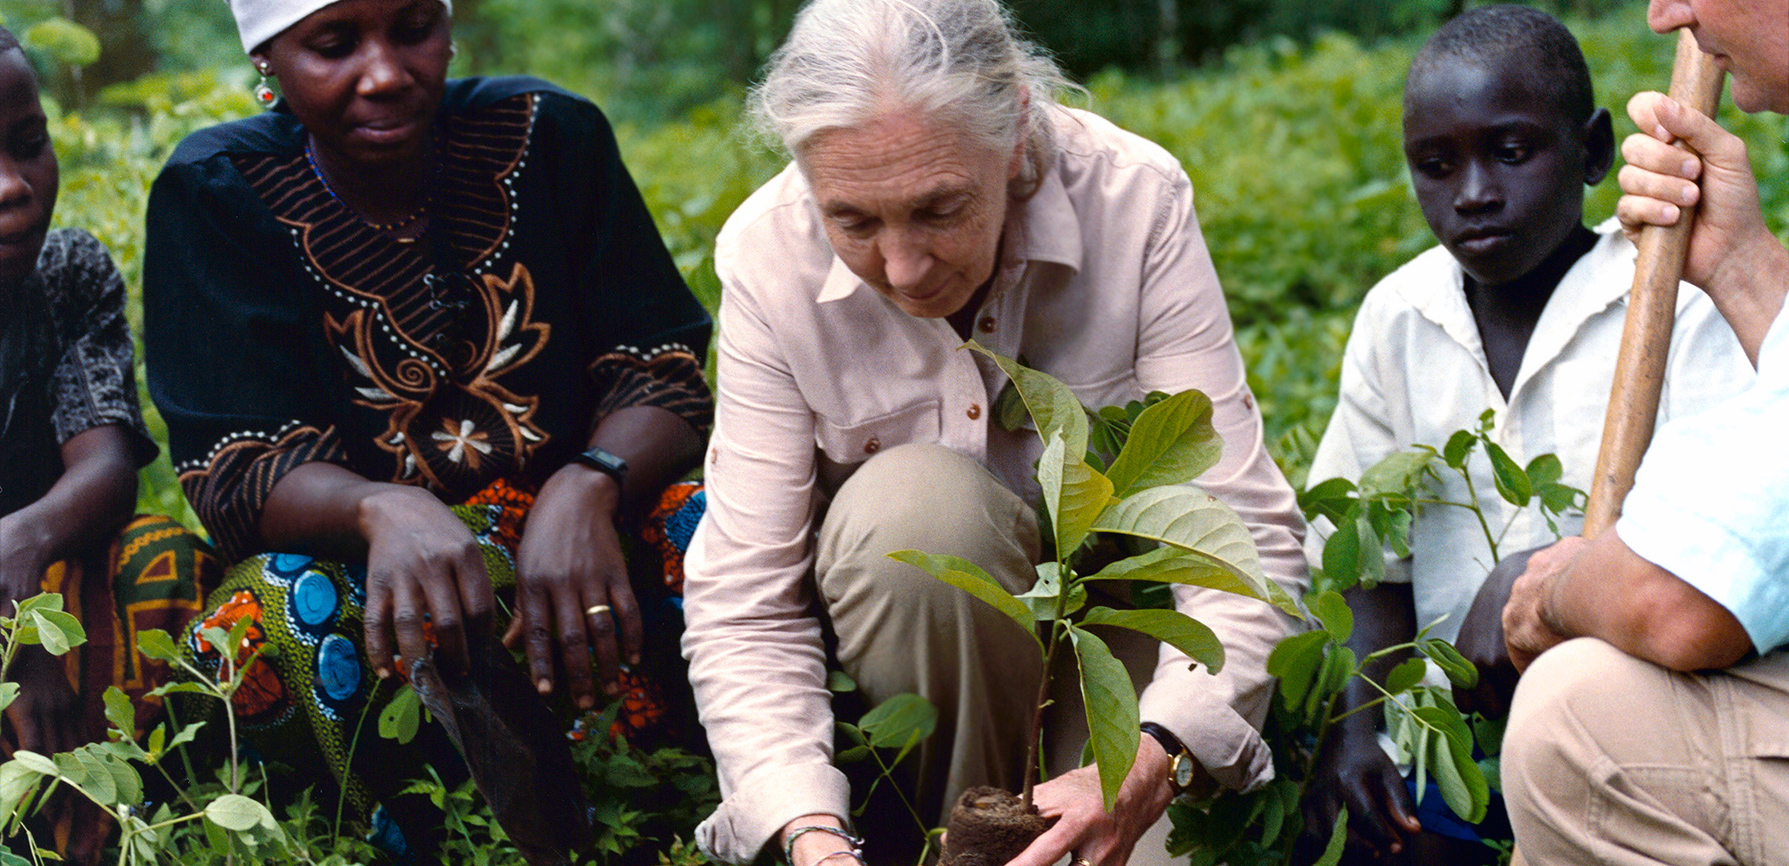 Jane Goodall (center) plants a tree seedling